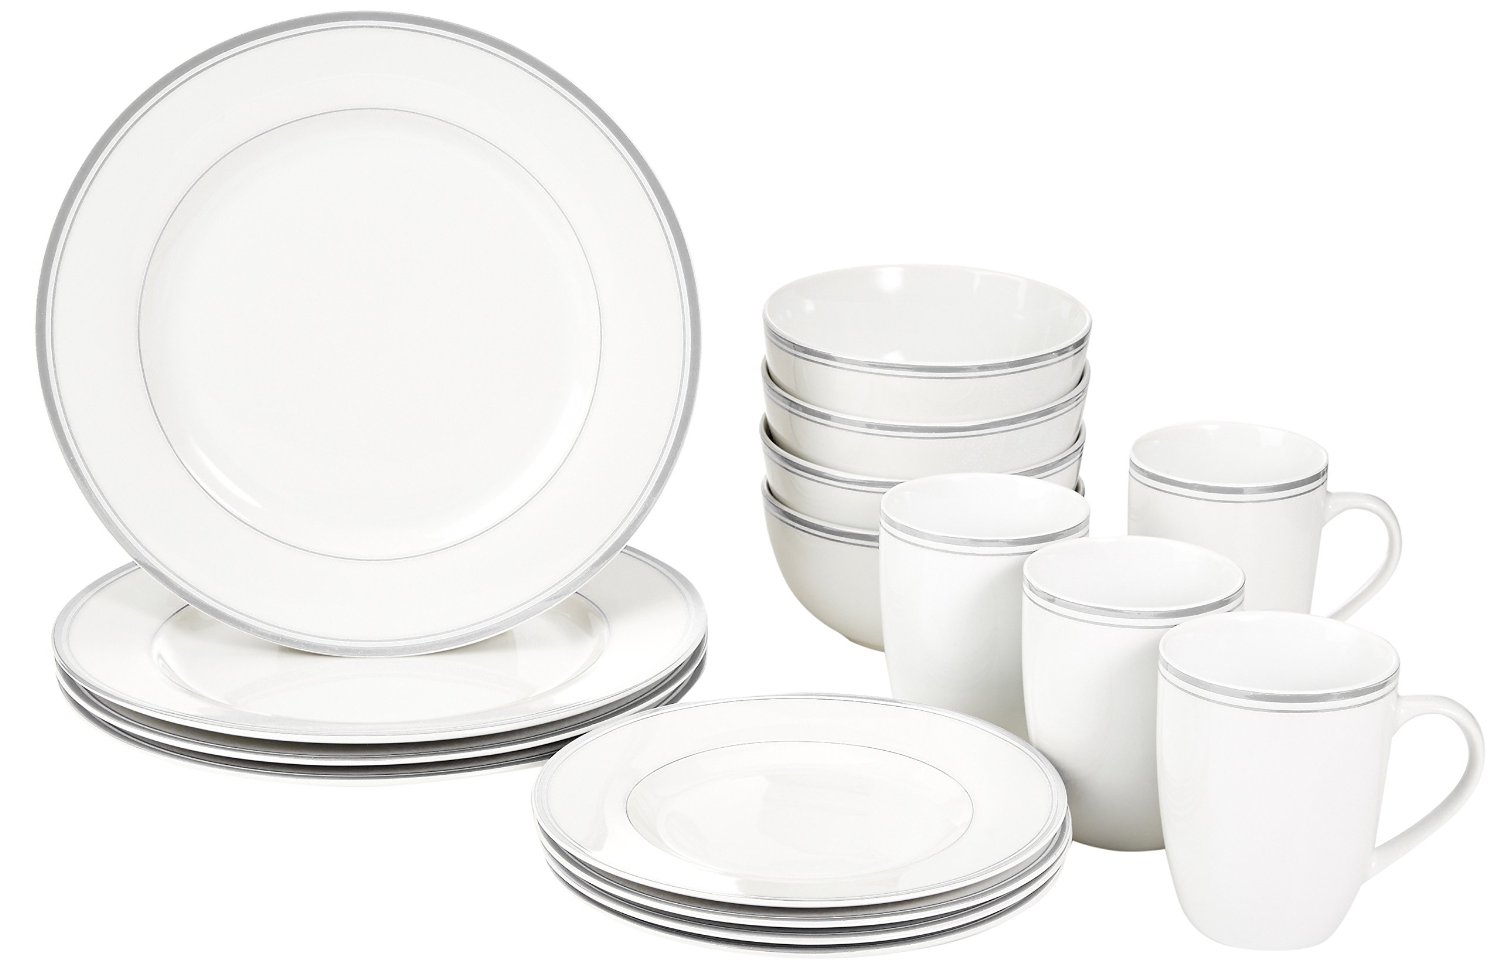 AmazonBasics 16-Piece Cafe Gray Stripe Dinnerware Set – Just $21.80!